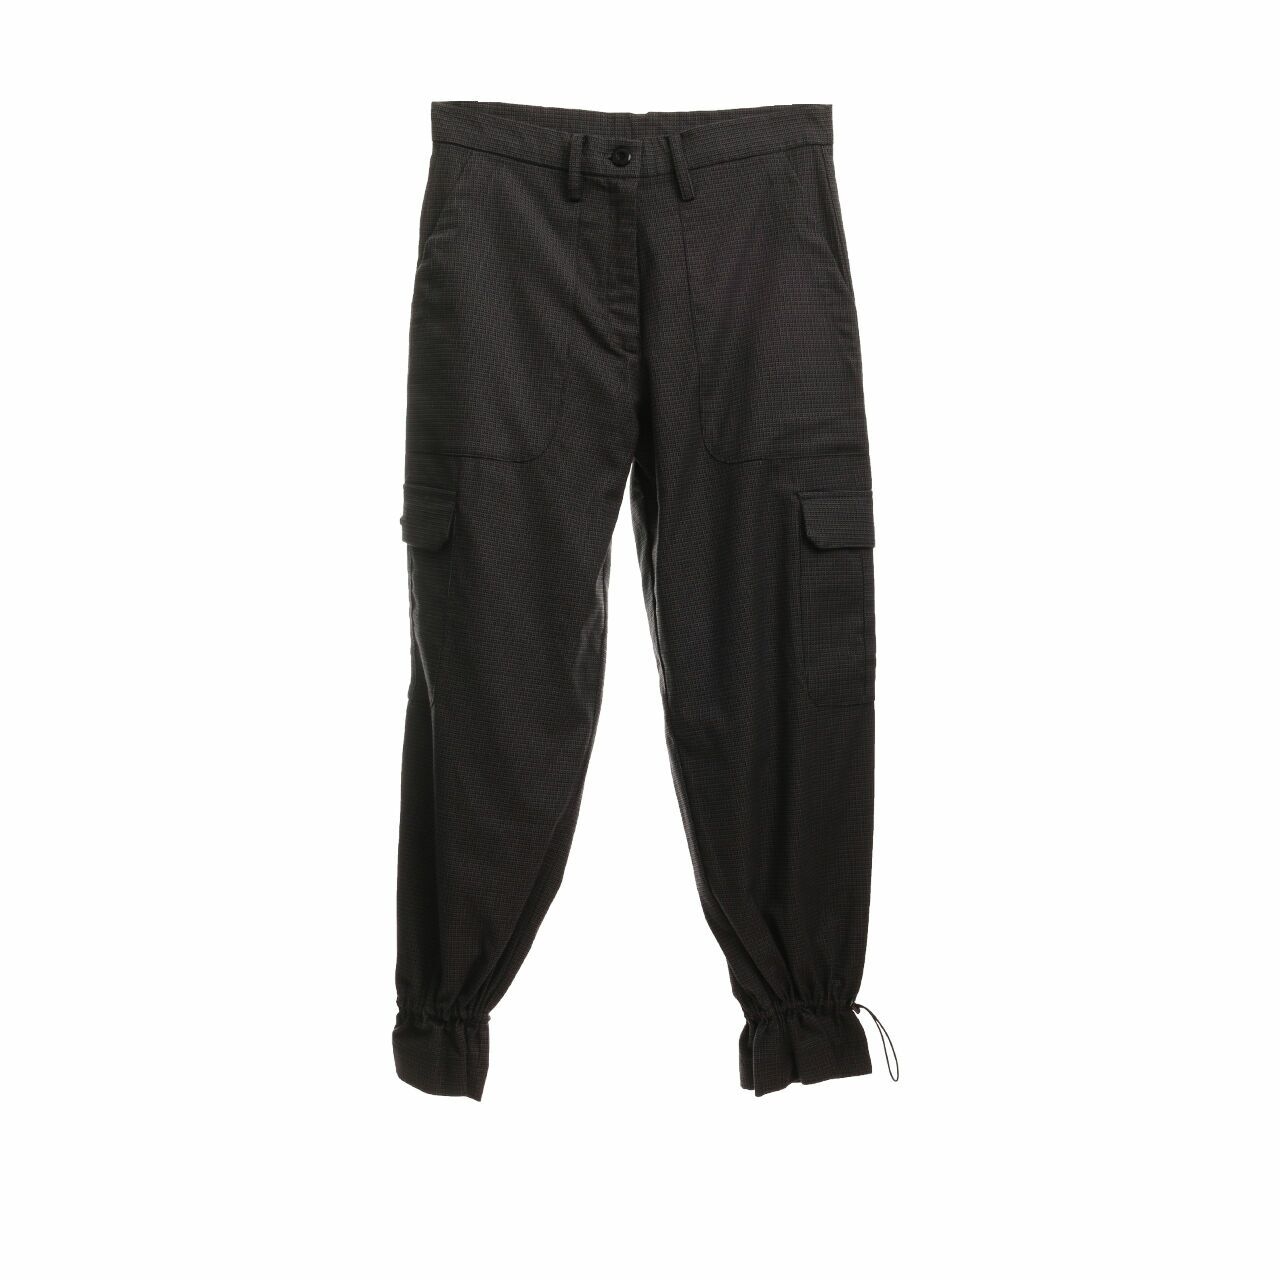 Wearstatuquo Black & Grey Long Pants